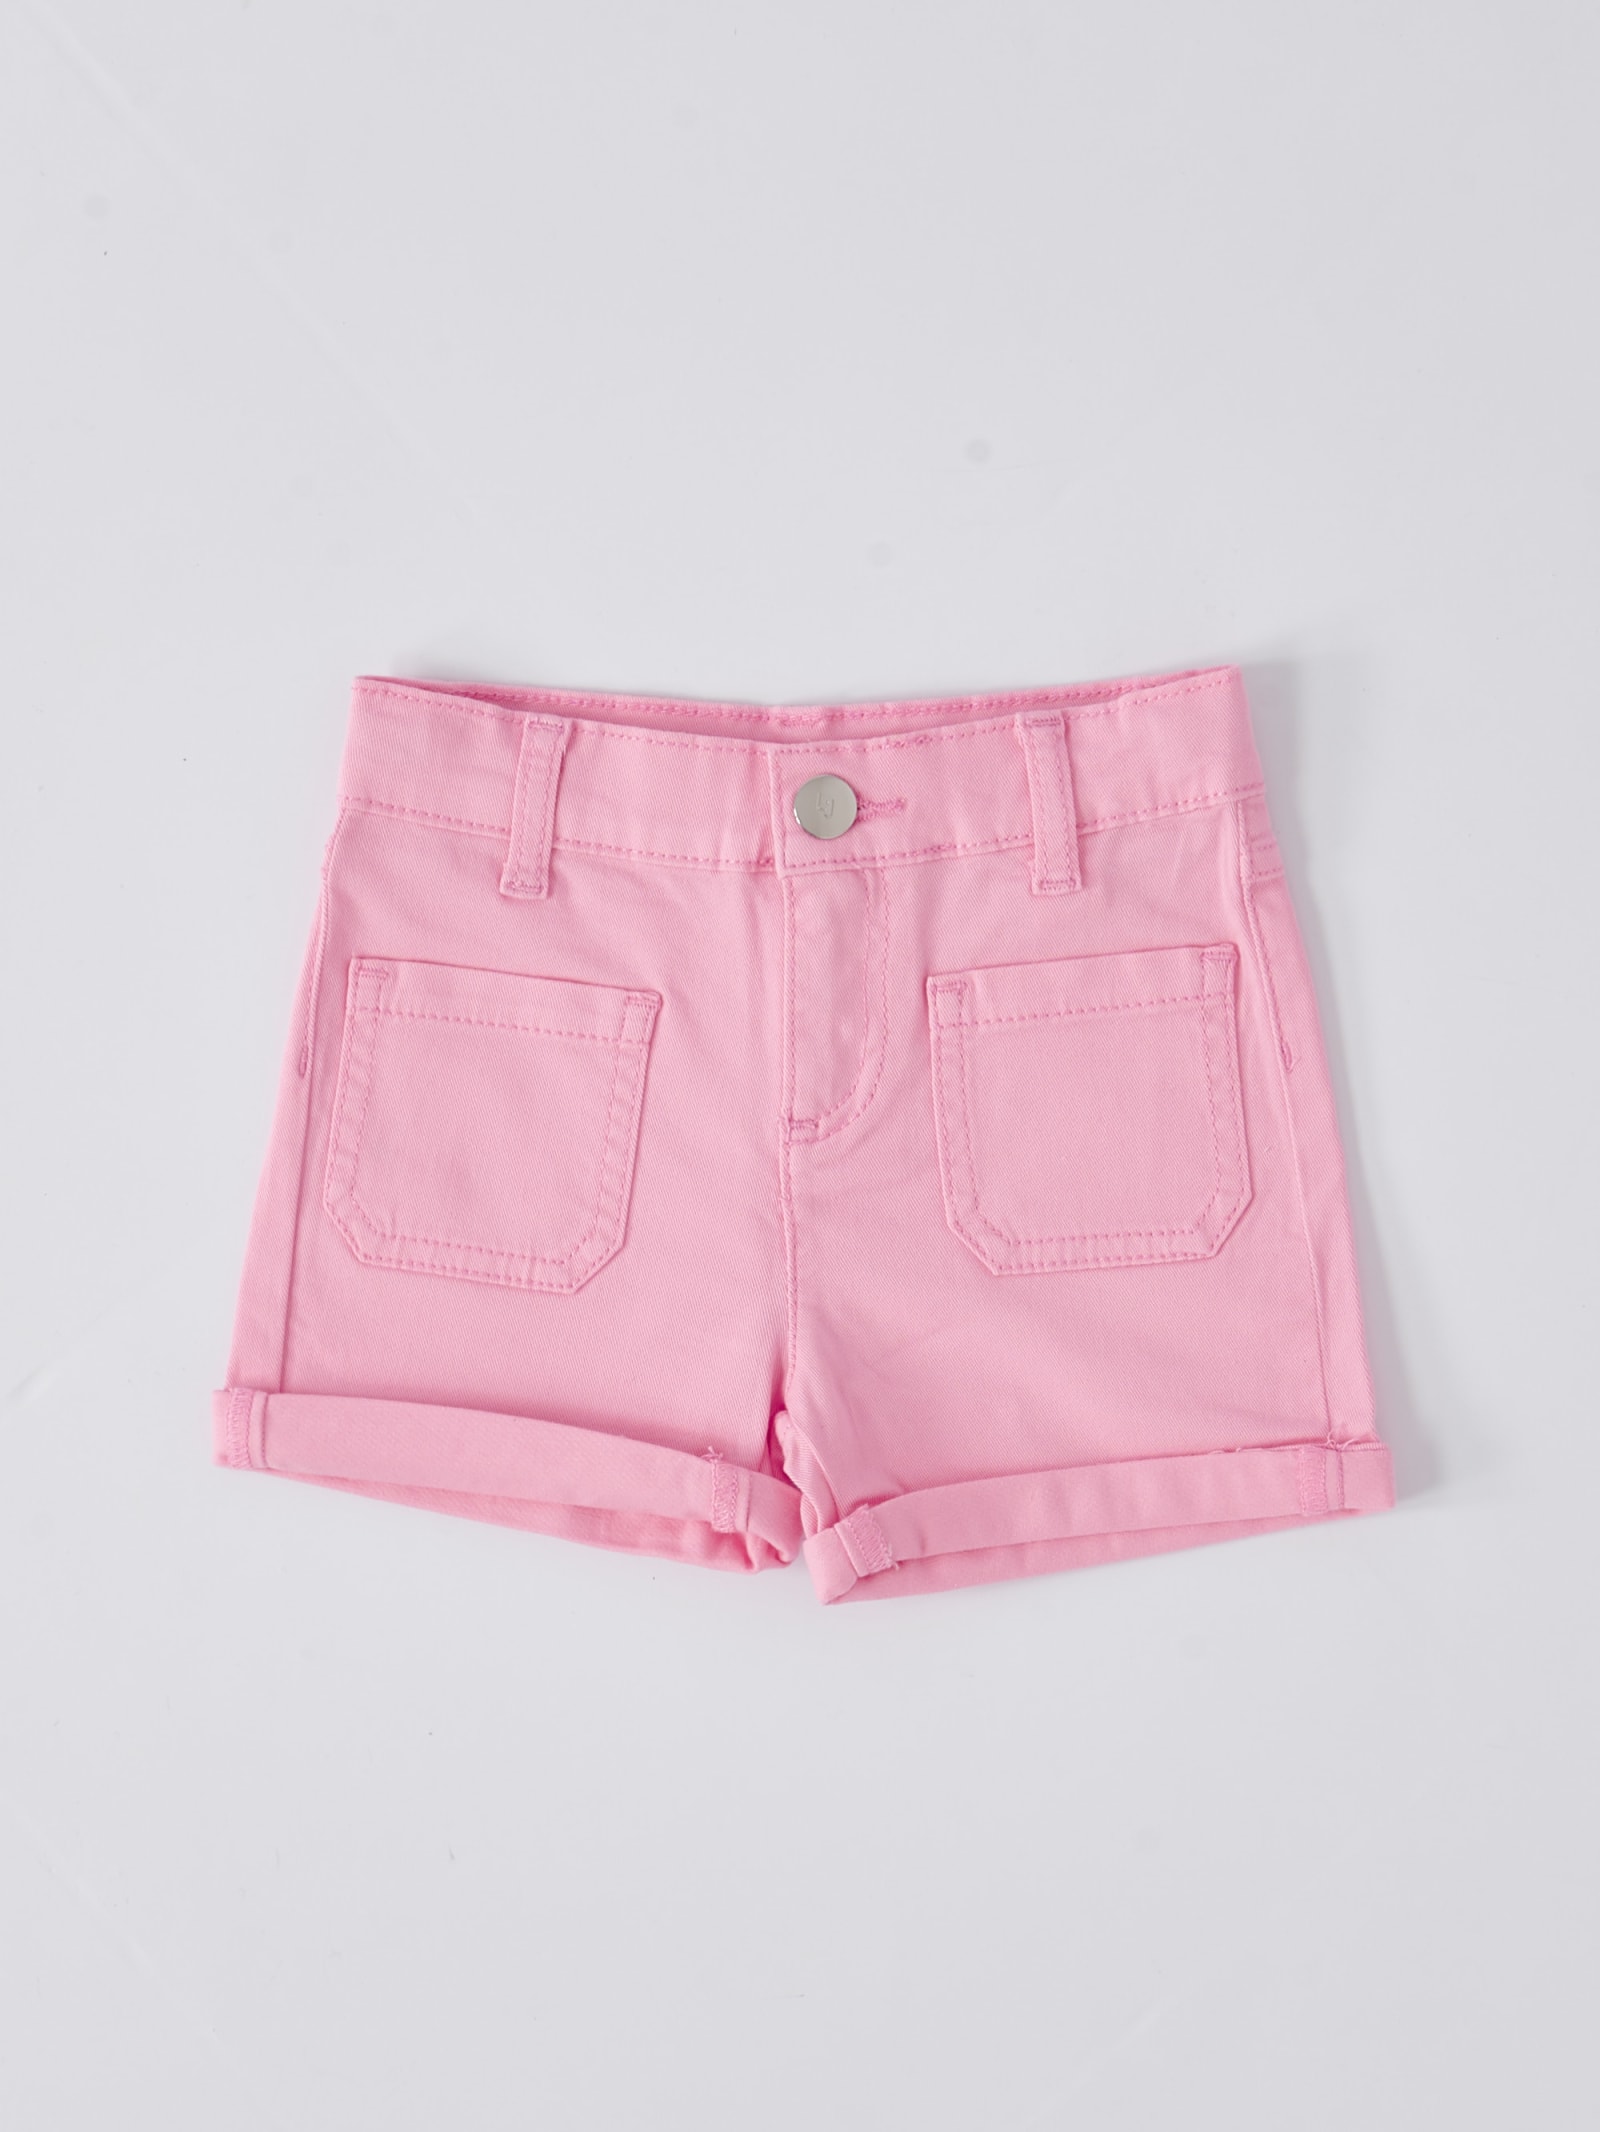 erven De andere dag Moreel Liu •jo Kids' Shorts Shorts In Rosa | ModeSens